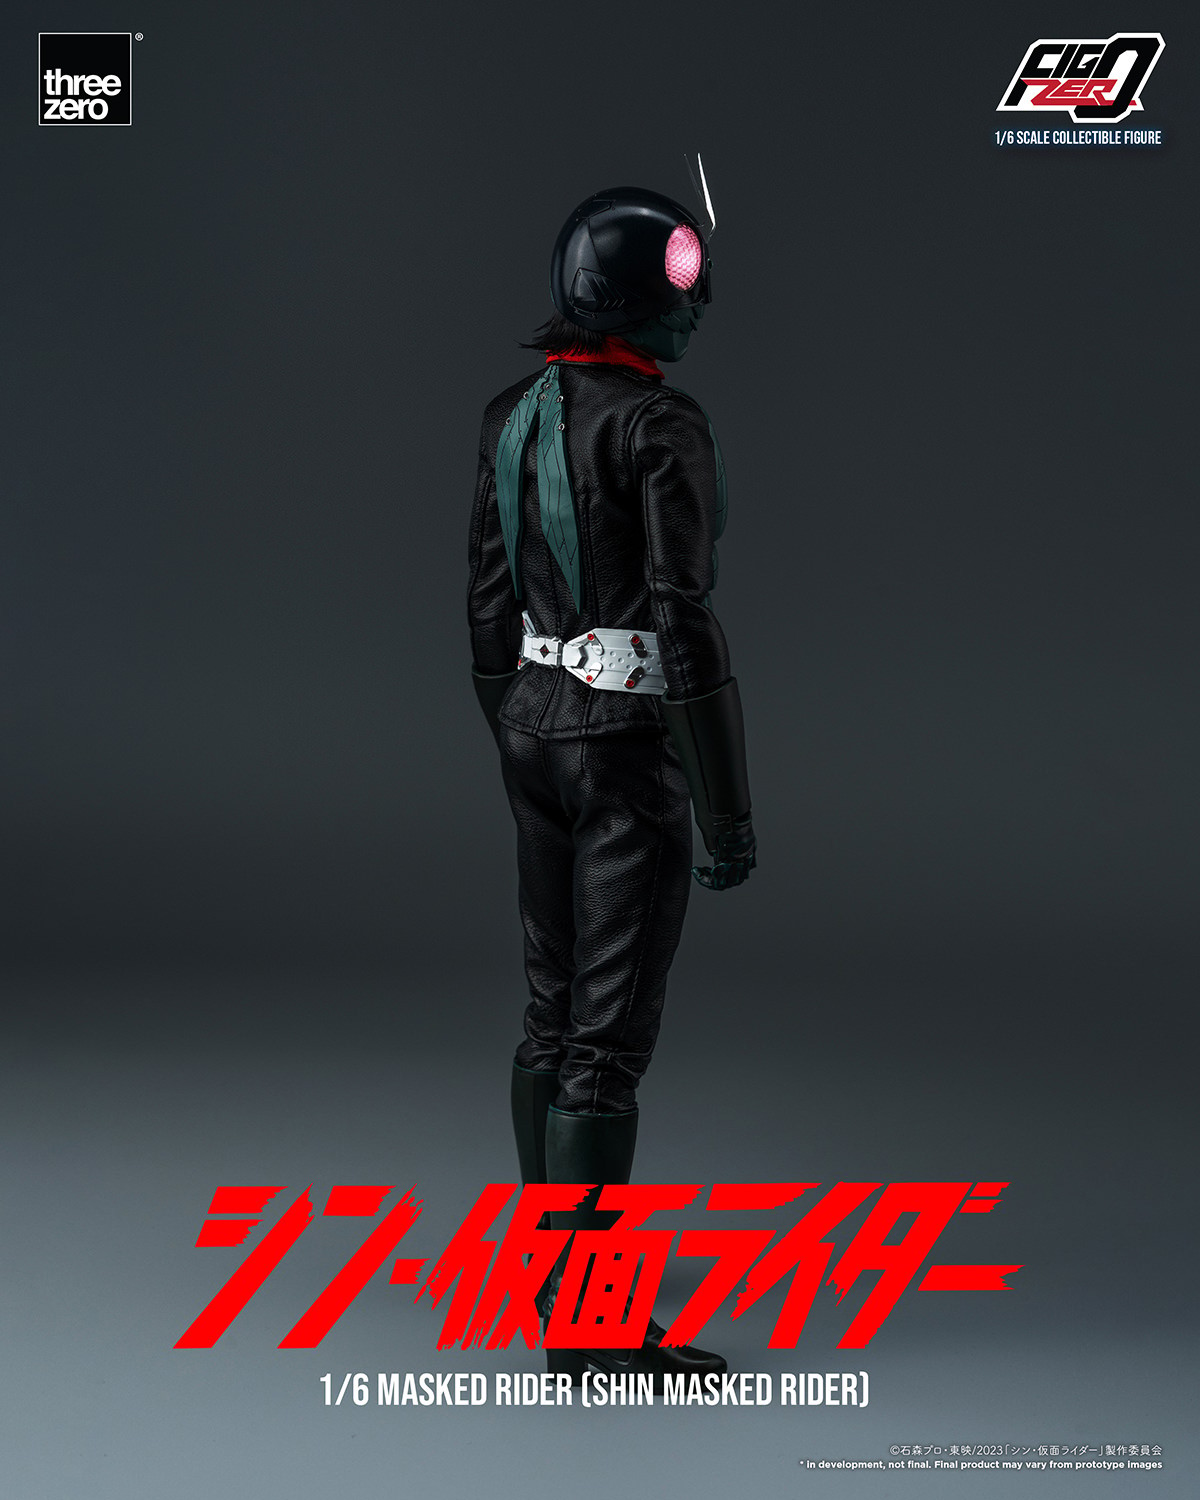 Shin Masked Rider (Prototype Shown) View 9